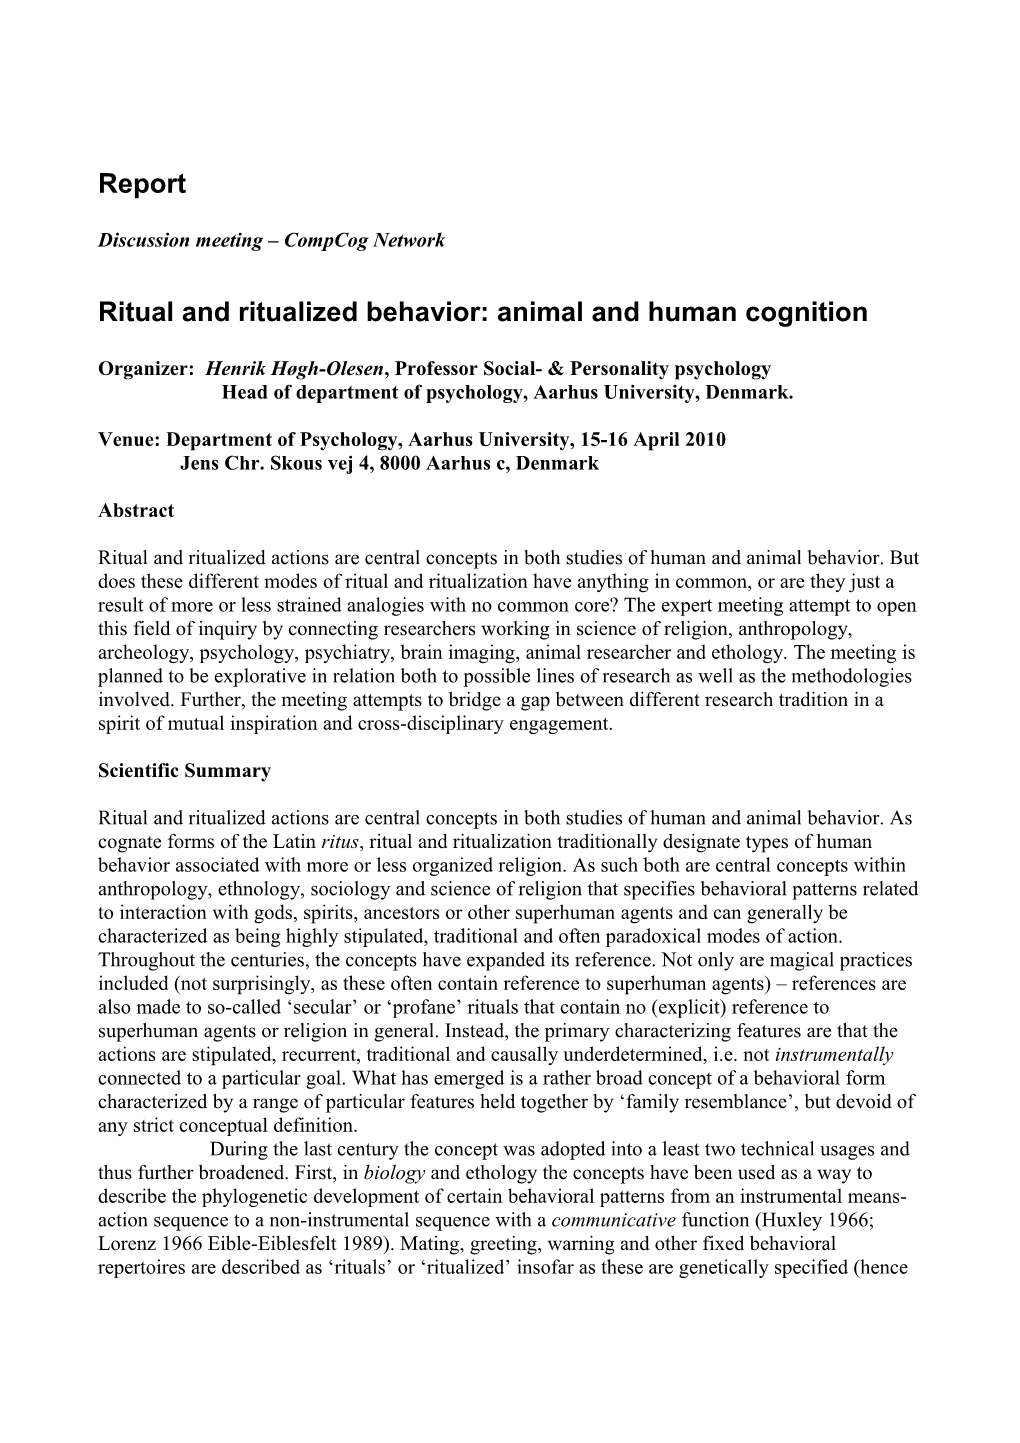 Ritual and Ritualized Behavior: Animal and Human Cognition